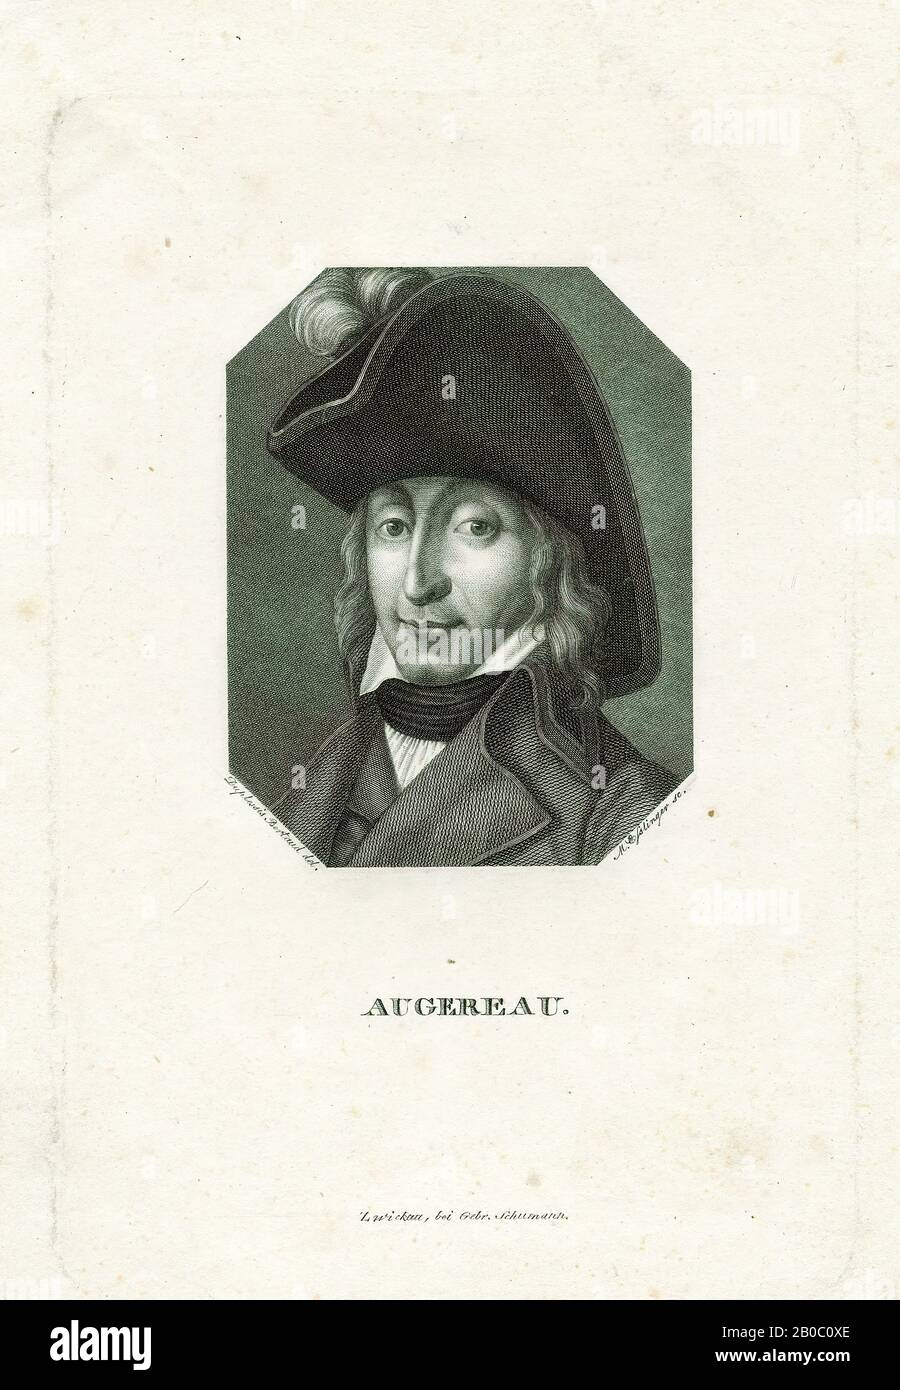 Johann Martin Esslinger, Augereau, 1793-1841, engraving on paper Stock Photo